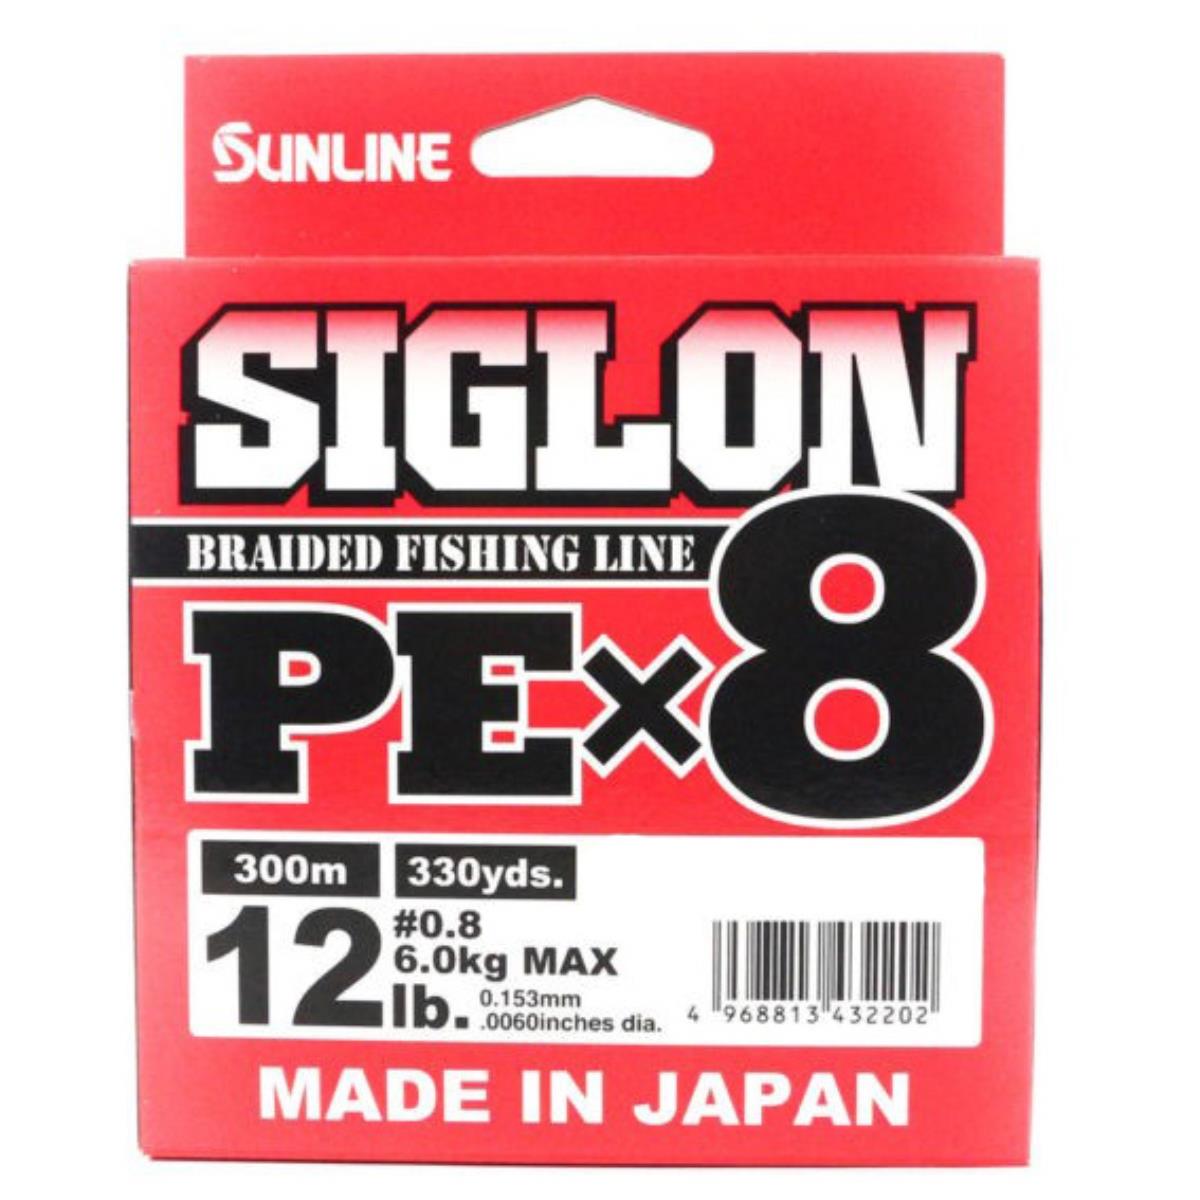 Шнур SIGLON PE×8 150M (Multikolor 5C) Sunline шнур